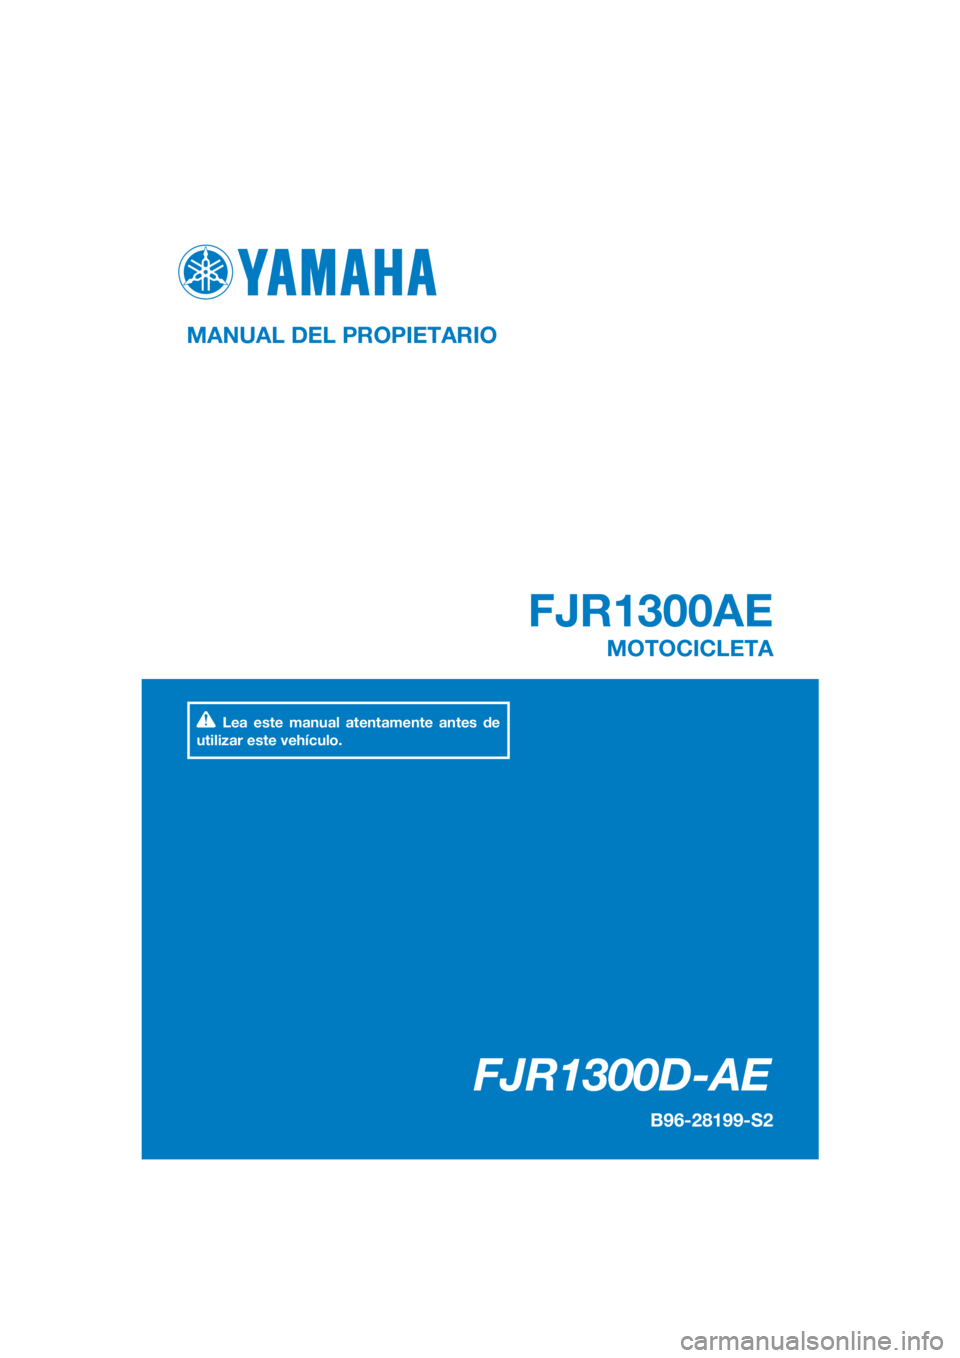 YAMAHA FJR1300AE 2020  Manuale de Empleo (in Spanish) DIC183
FJR1300D-AE
FJR1300AE
MANUAL DEL PROPIETARIO
B96-28199-S2
MOTOCICLETA
Lea este manual atentamente antes de 
utilizar este vehículo.
[Spanish  (S)] 